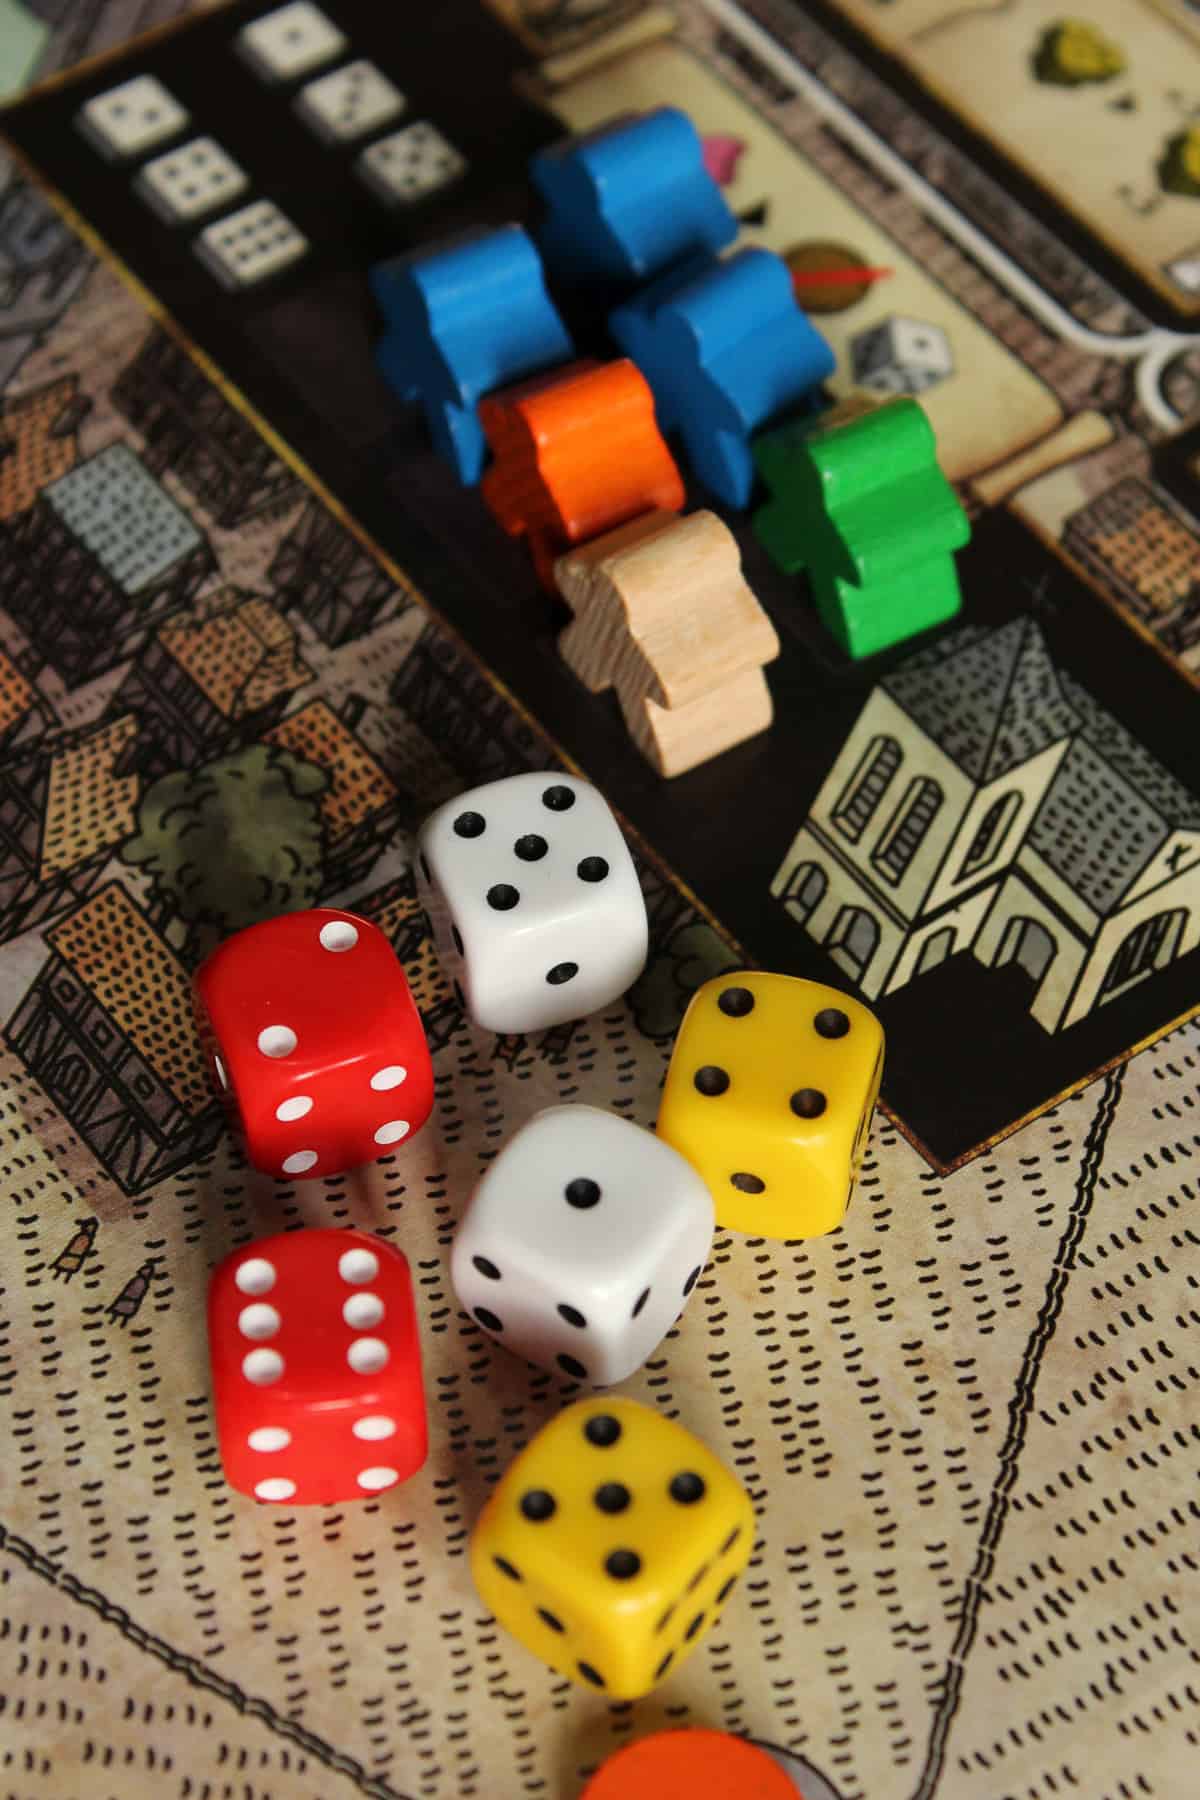 Multi-colored dices and board game